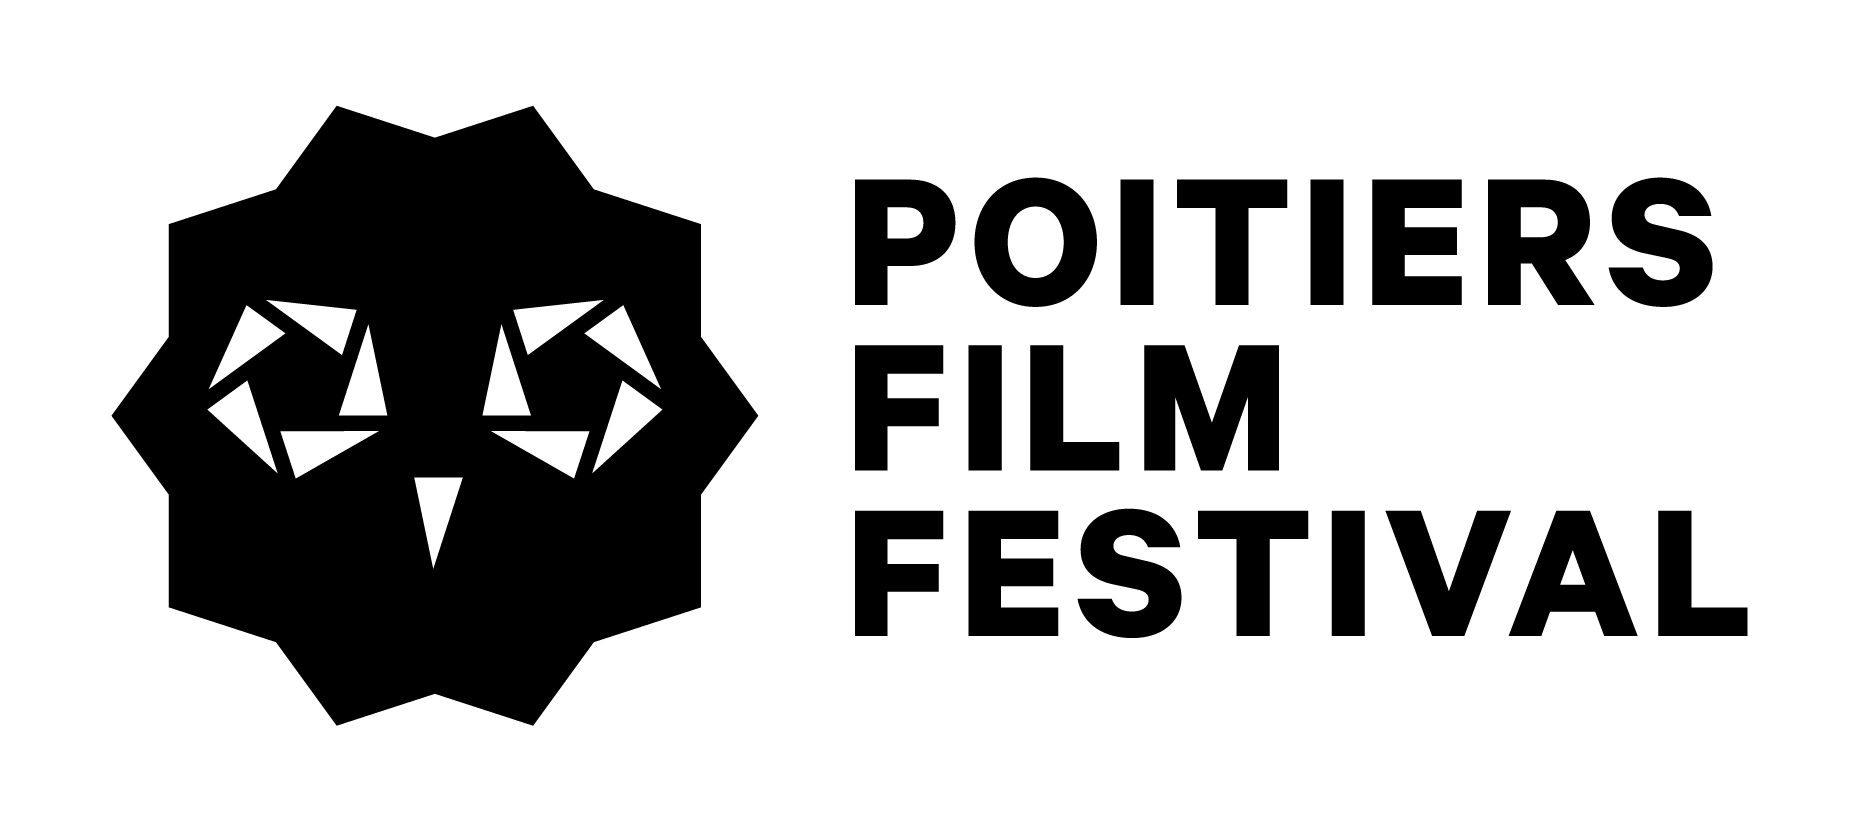 The Poitiers Film Festival logo